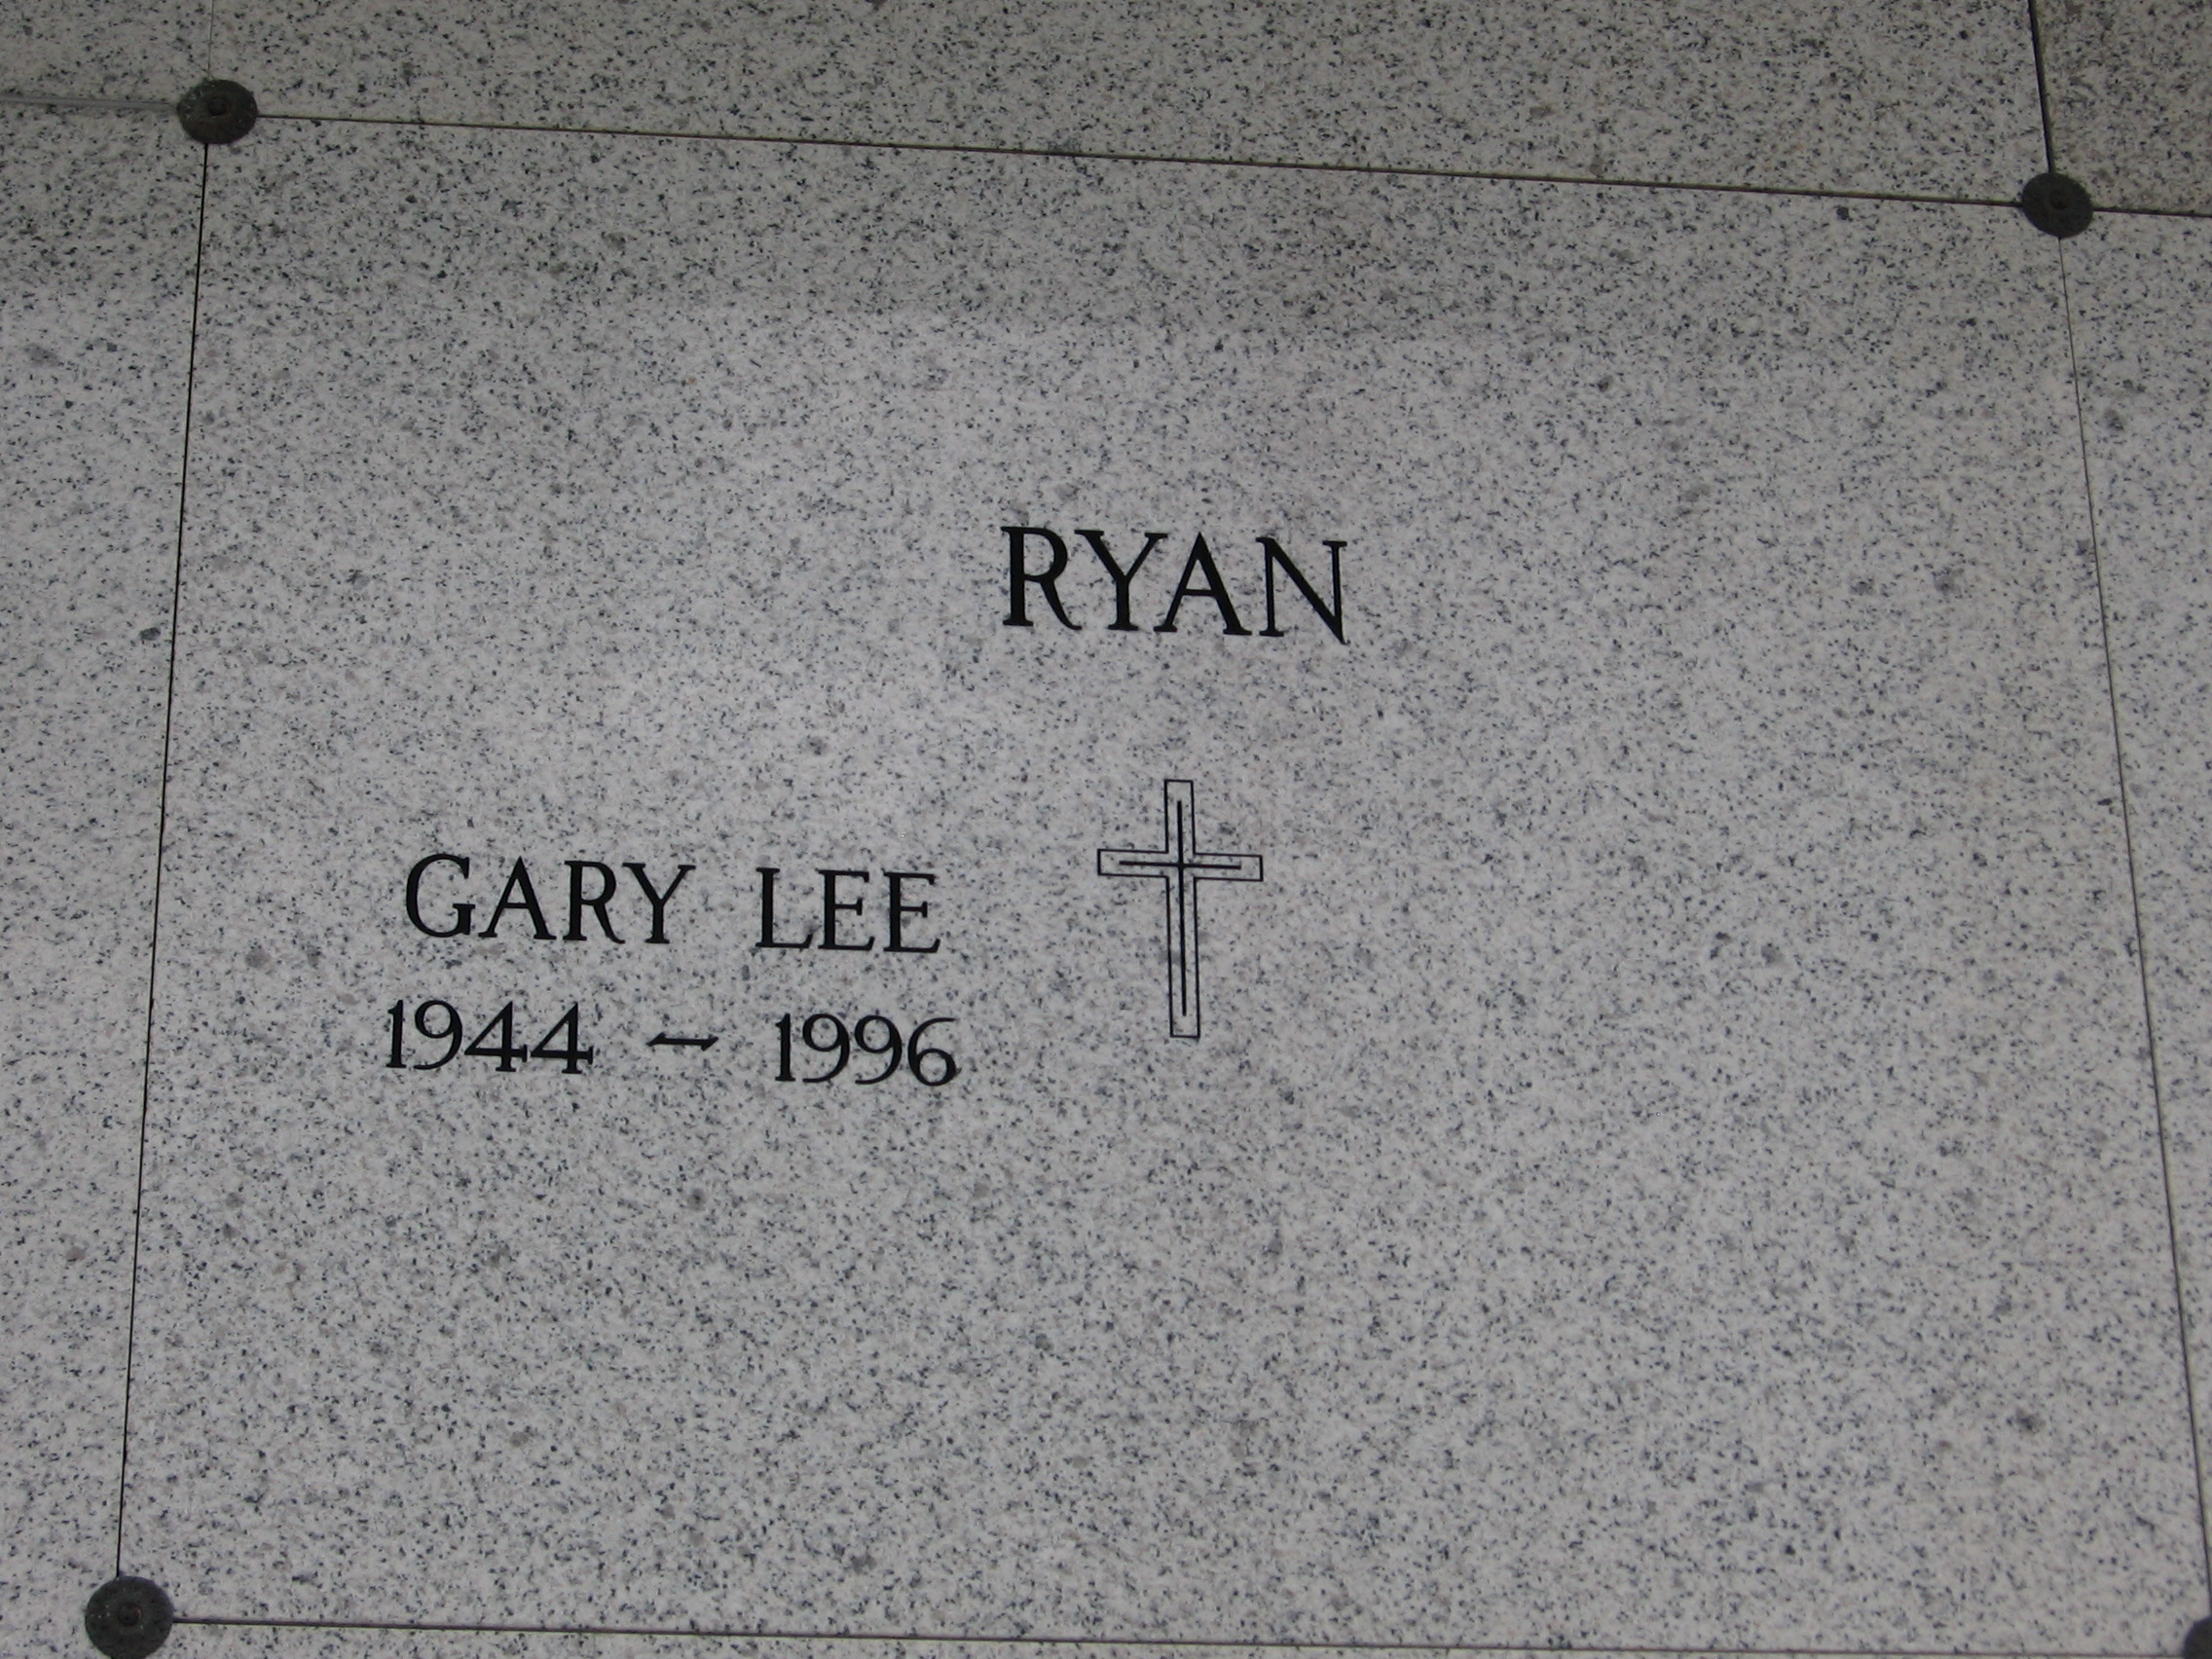 Gary Lee Ryan